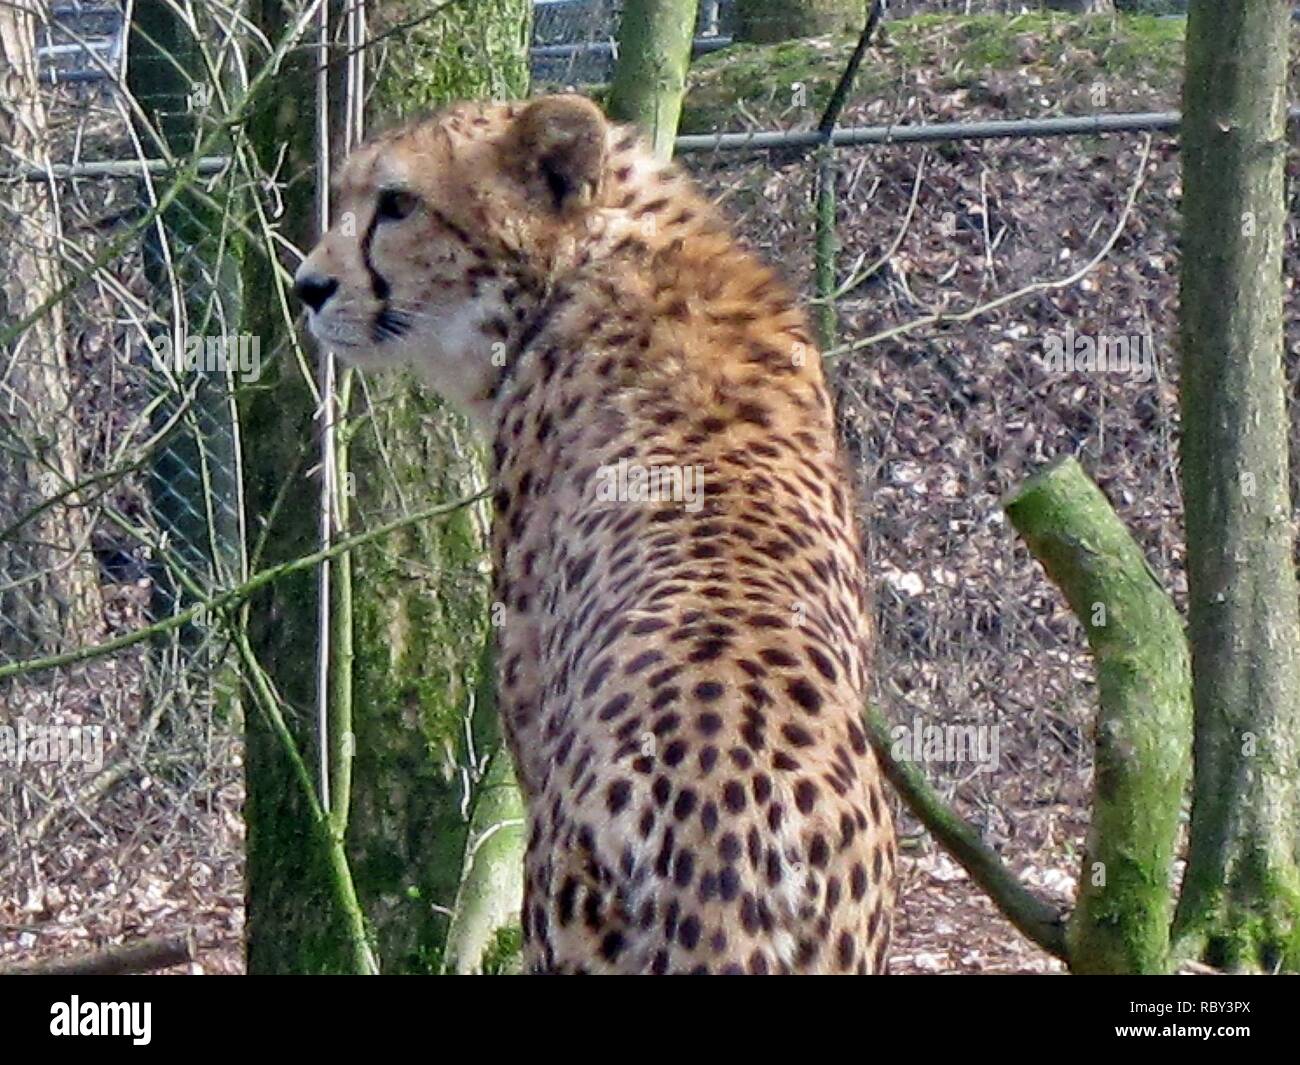 Acinonyx jubatus (Cheetah), Burgers zoo, Arnhem, the Netherlands. Stock Photo